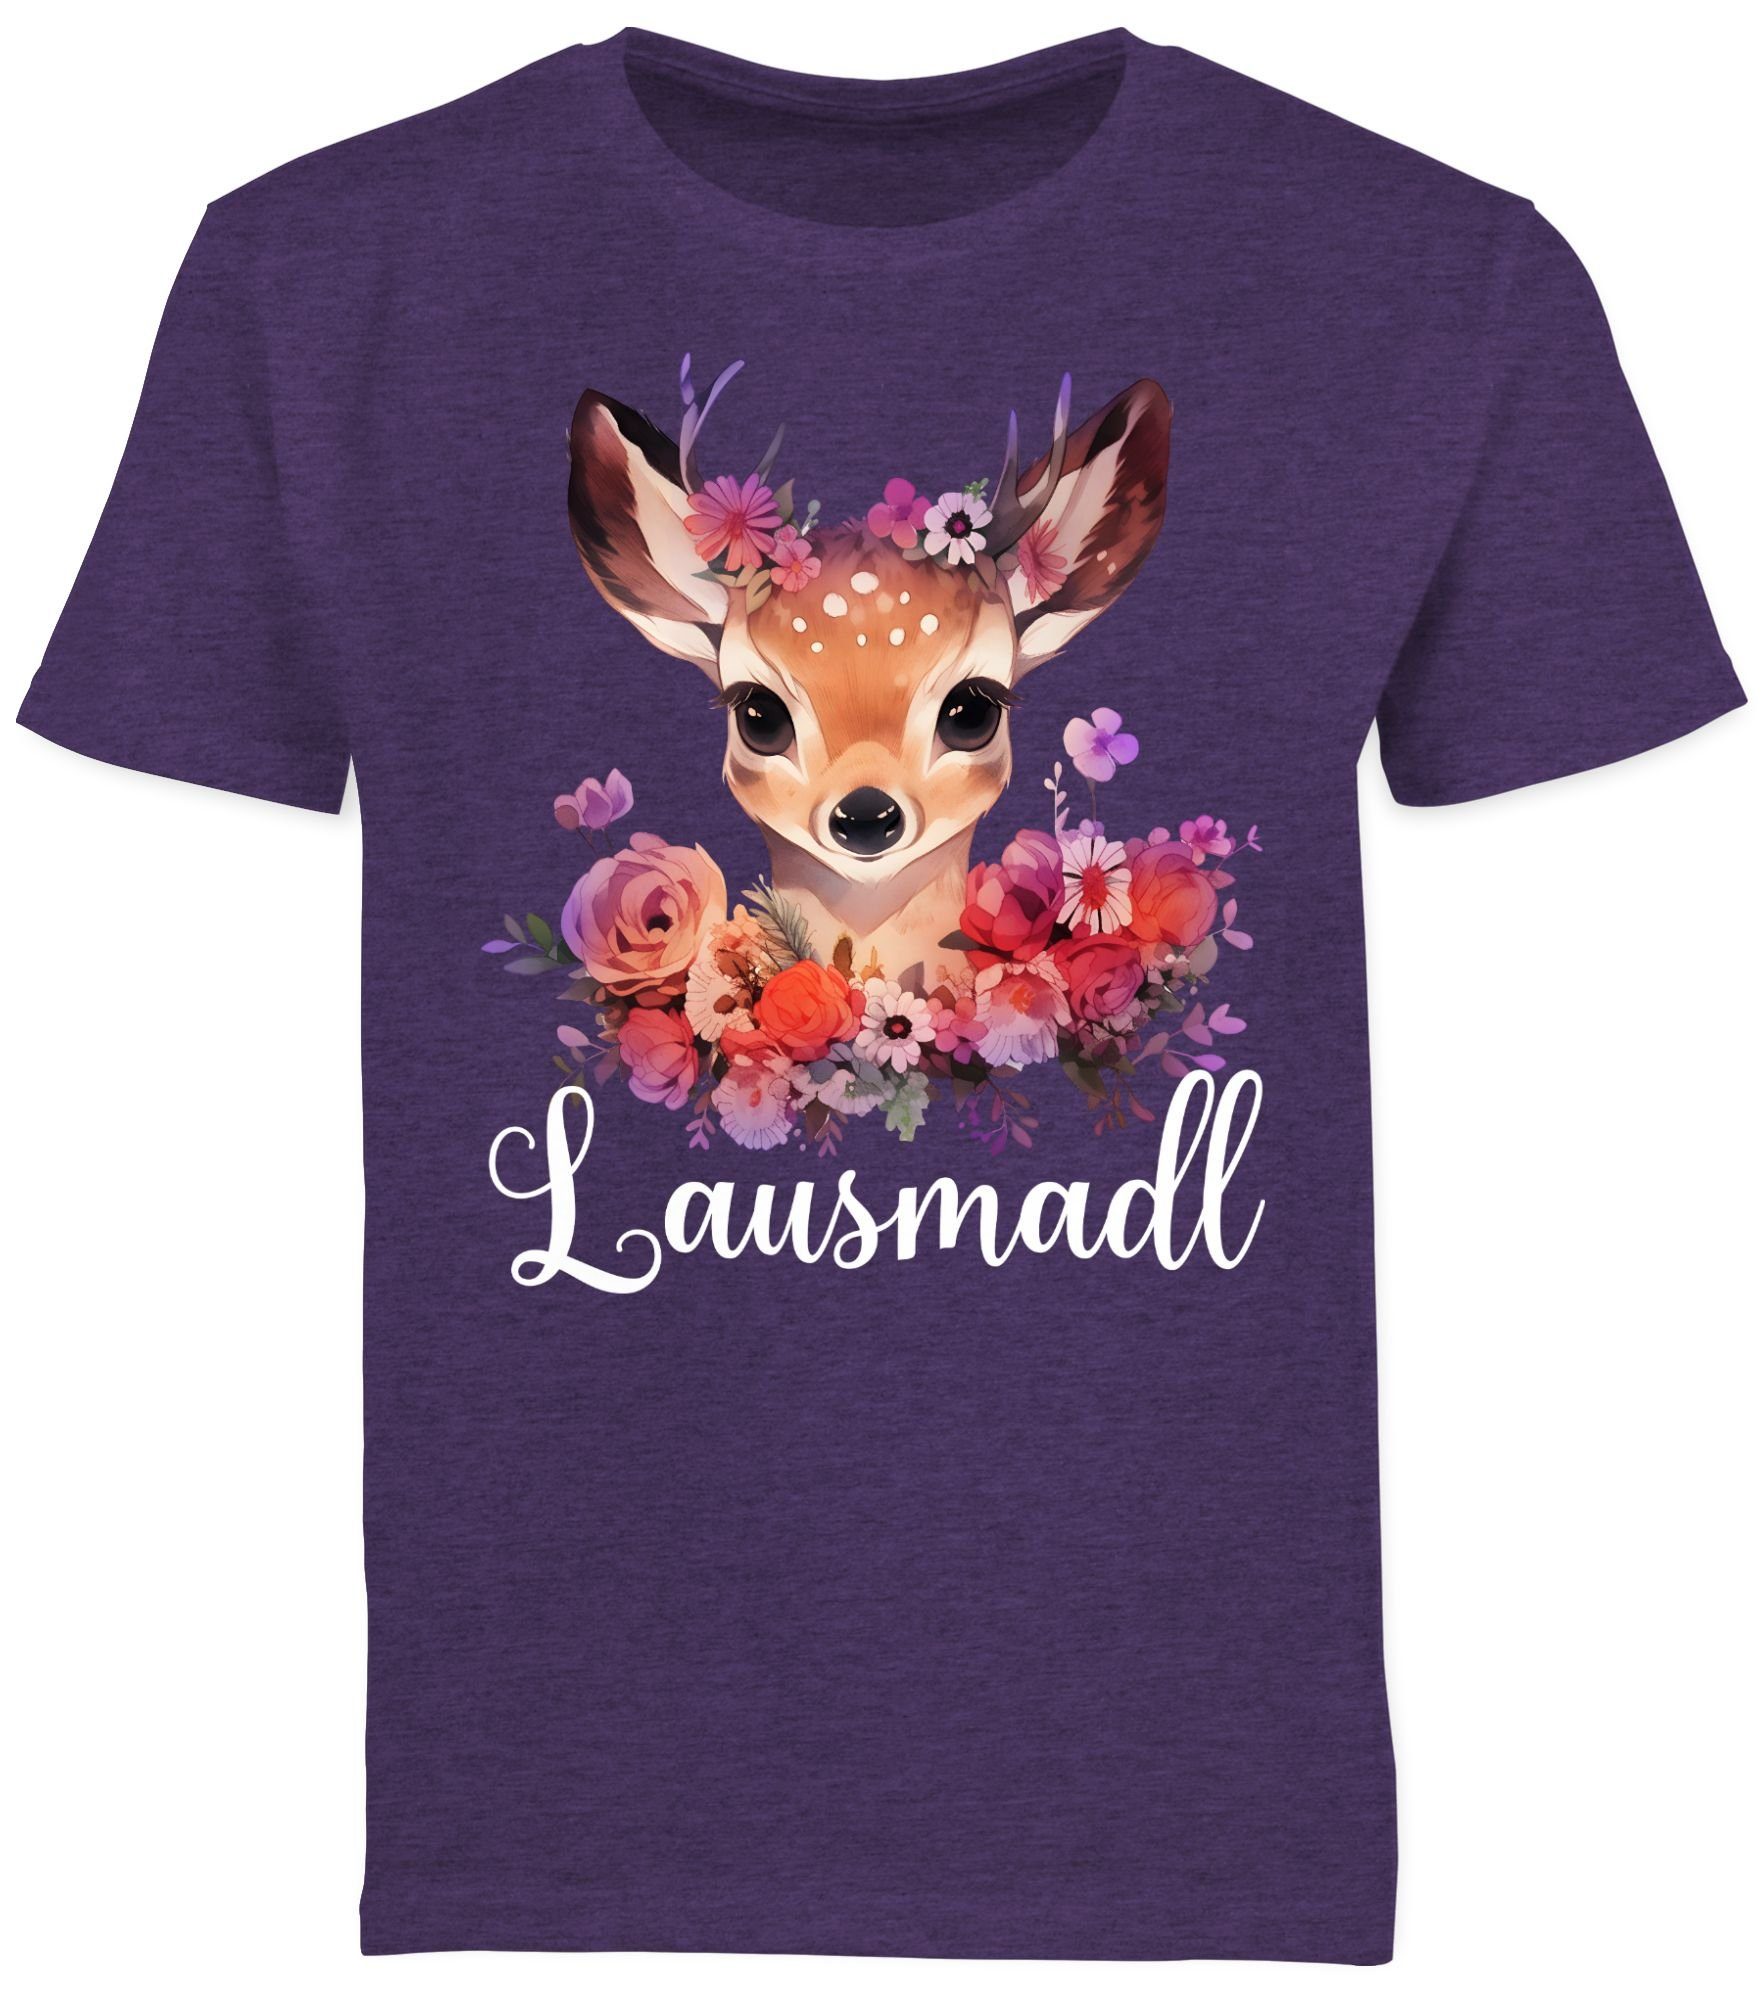 Lausmadl Lausdrindl Meliert Kinder Outfit 02 Shirtracer für Lila Mode Oktoberfest T-Shirt Lausmadel Lausmädchen